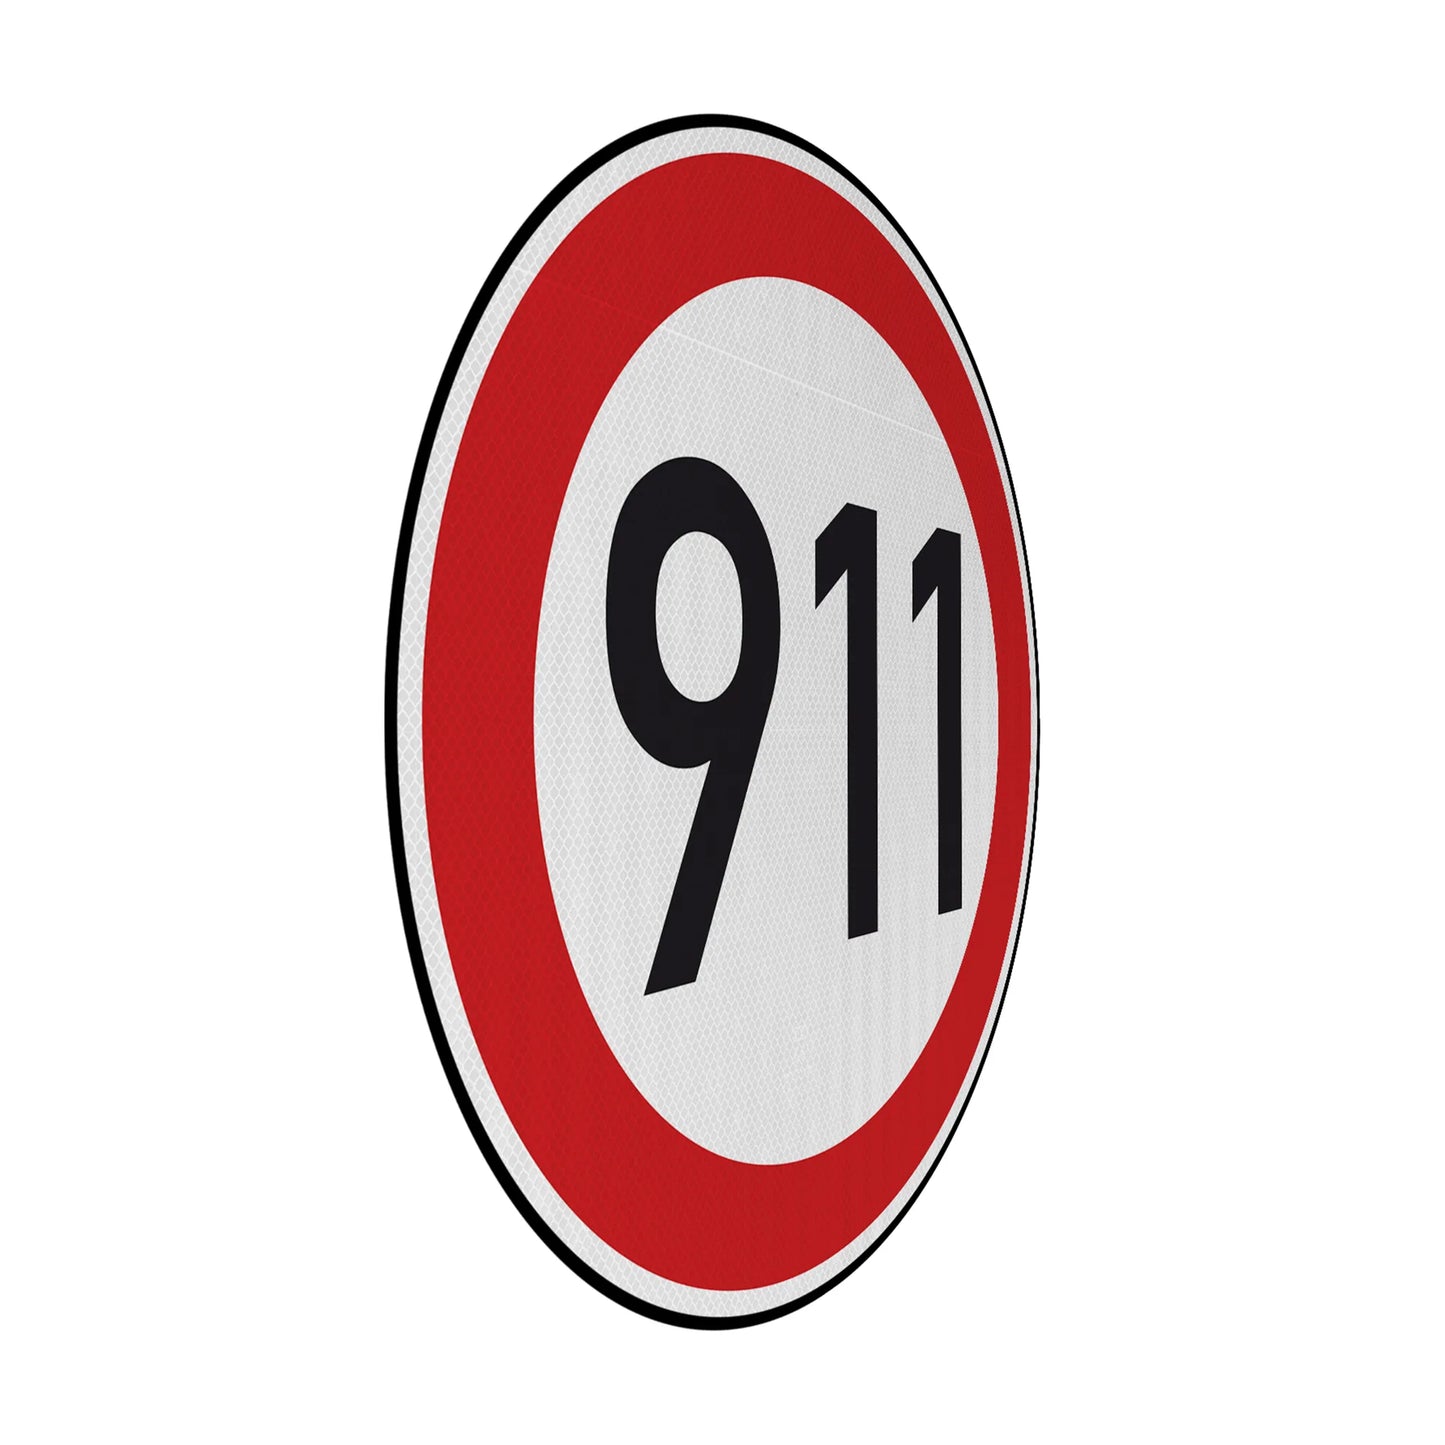 Tempolimit 911 Streetsign